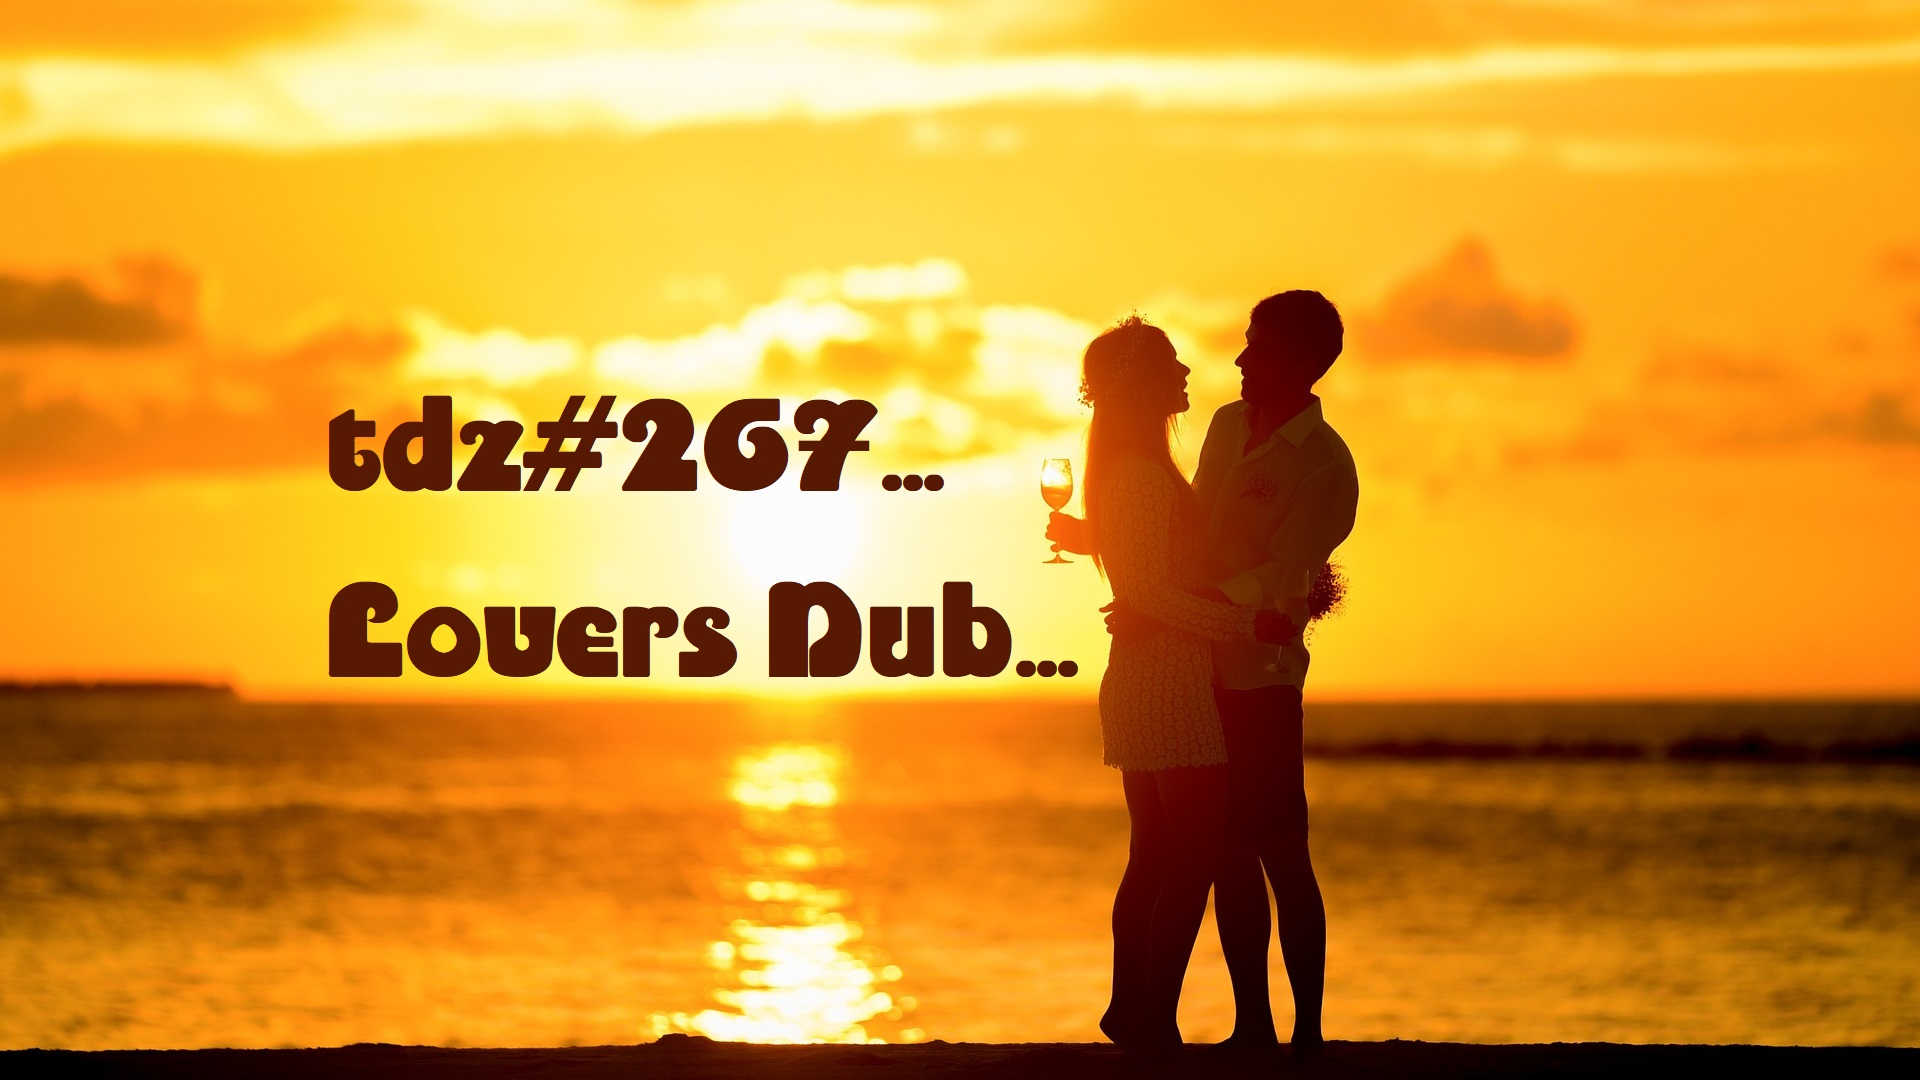 TDZ#267... Lovers Dub...